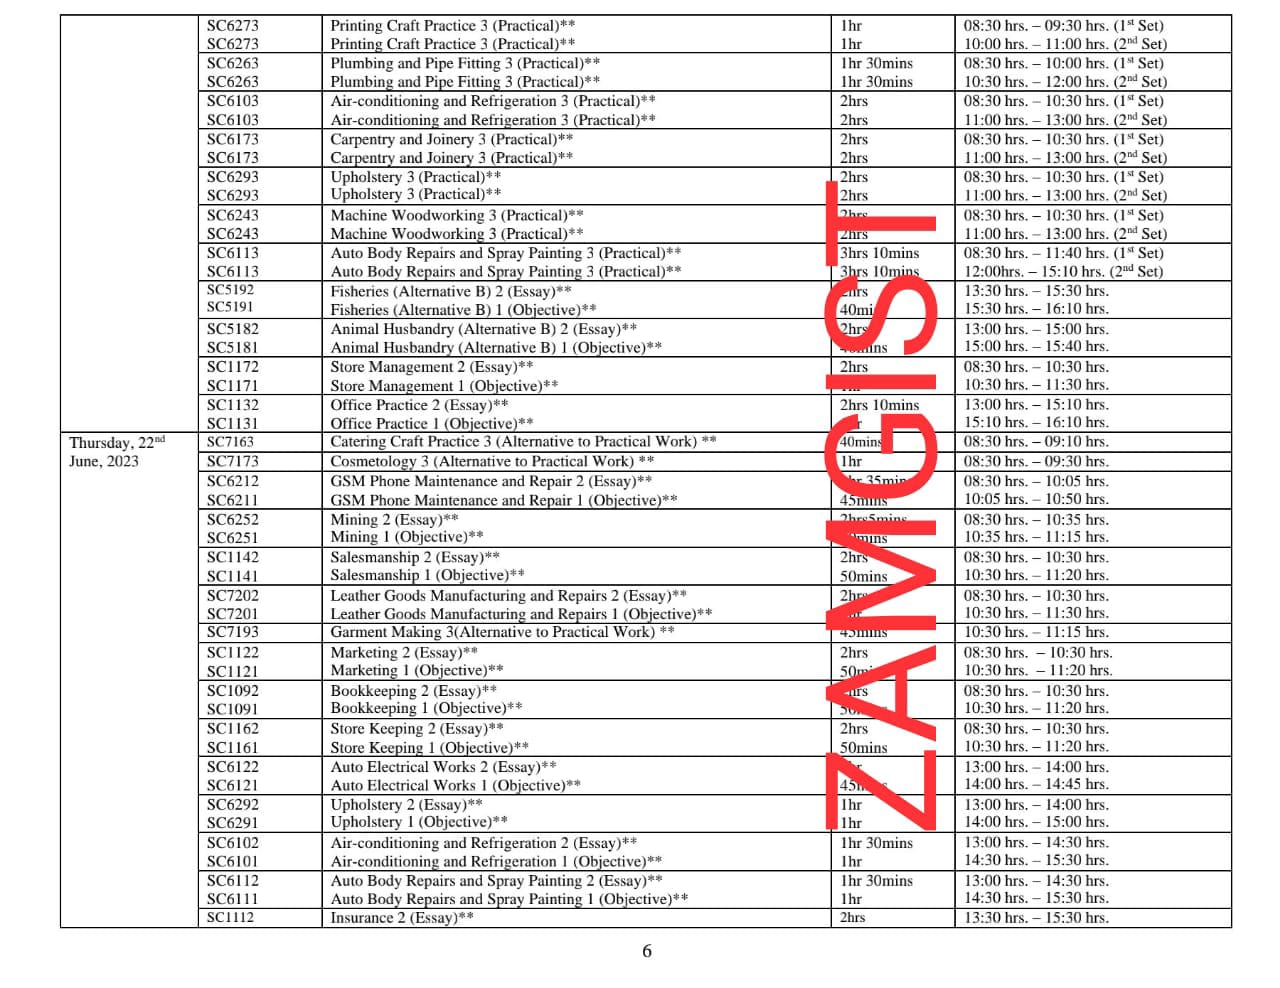 WAEC 2023 Timetable Image 6